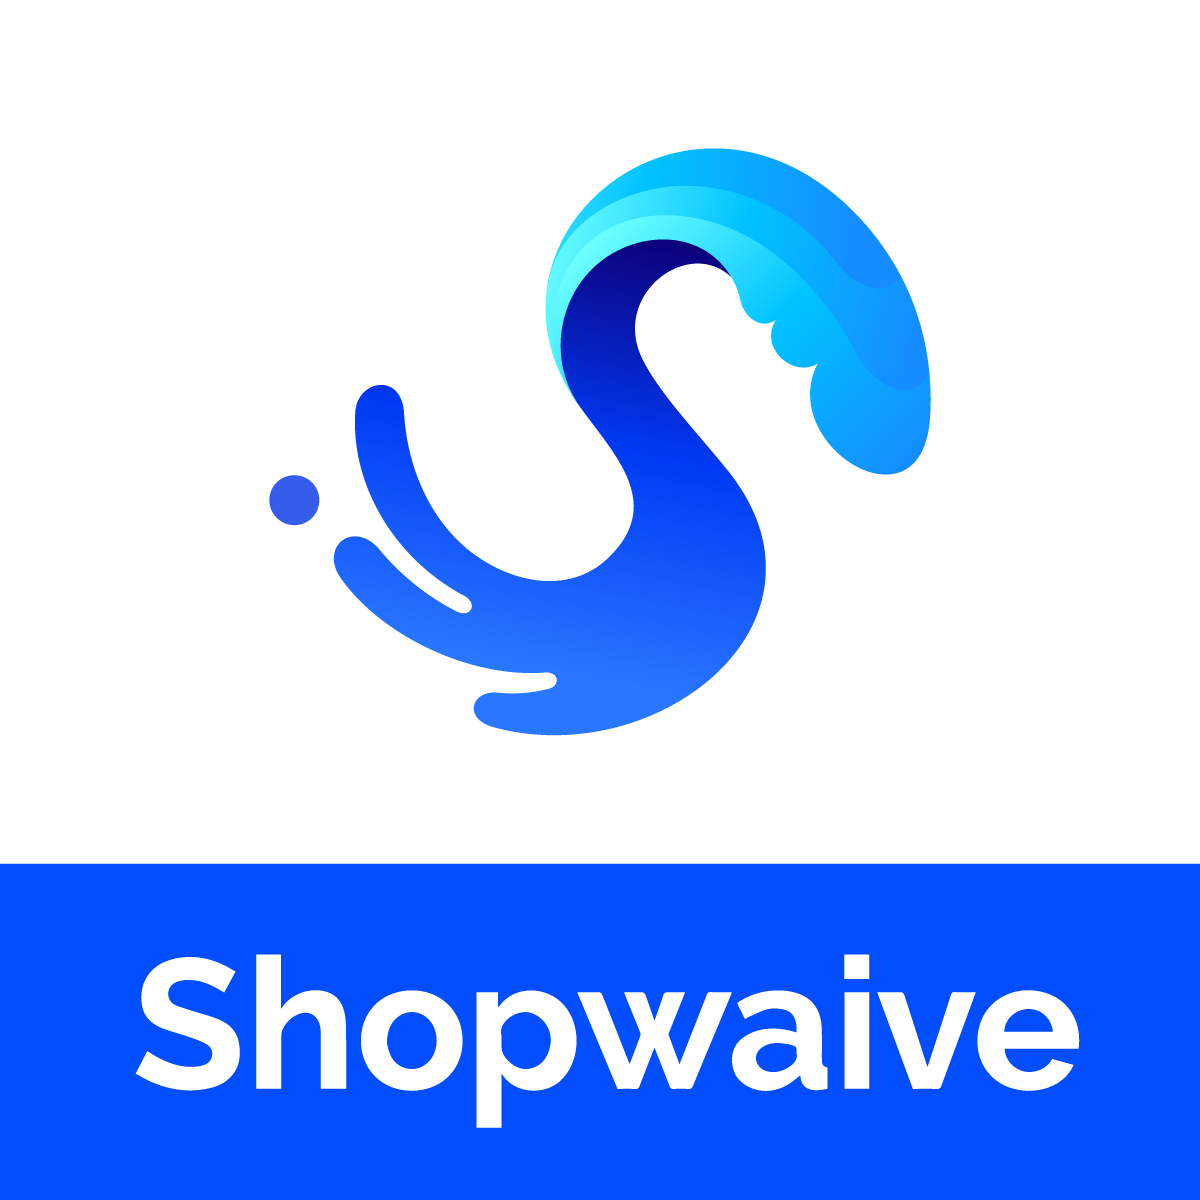 Shopwaive